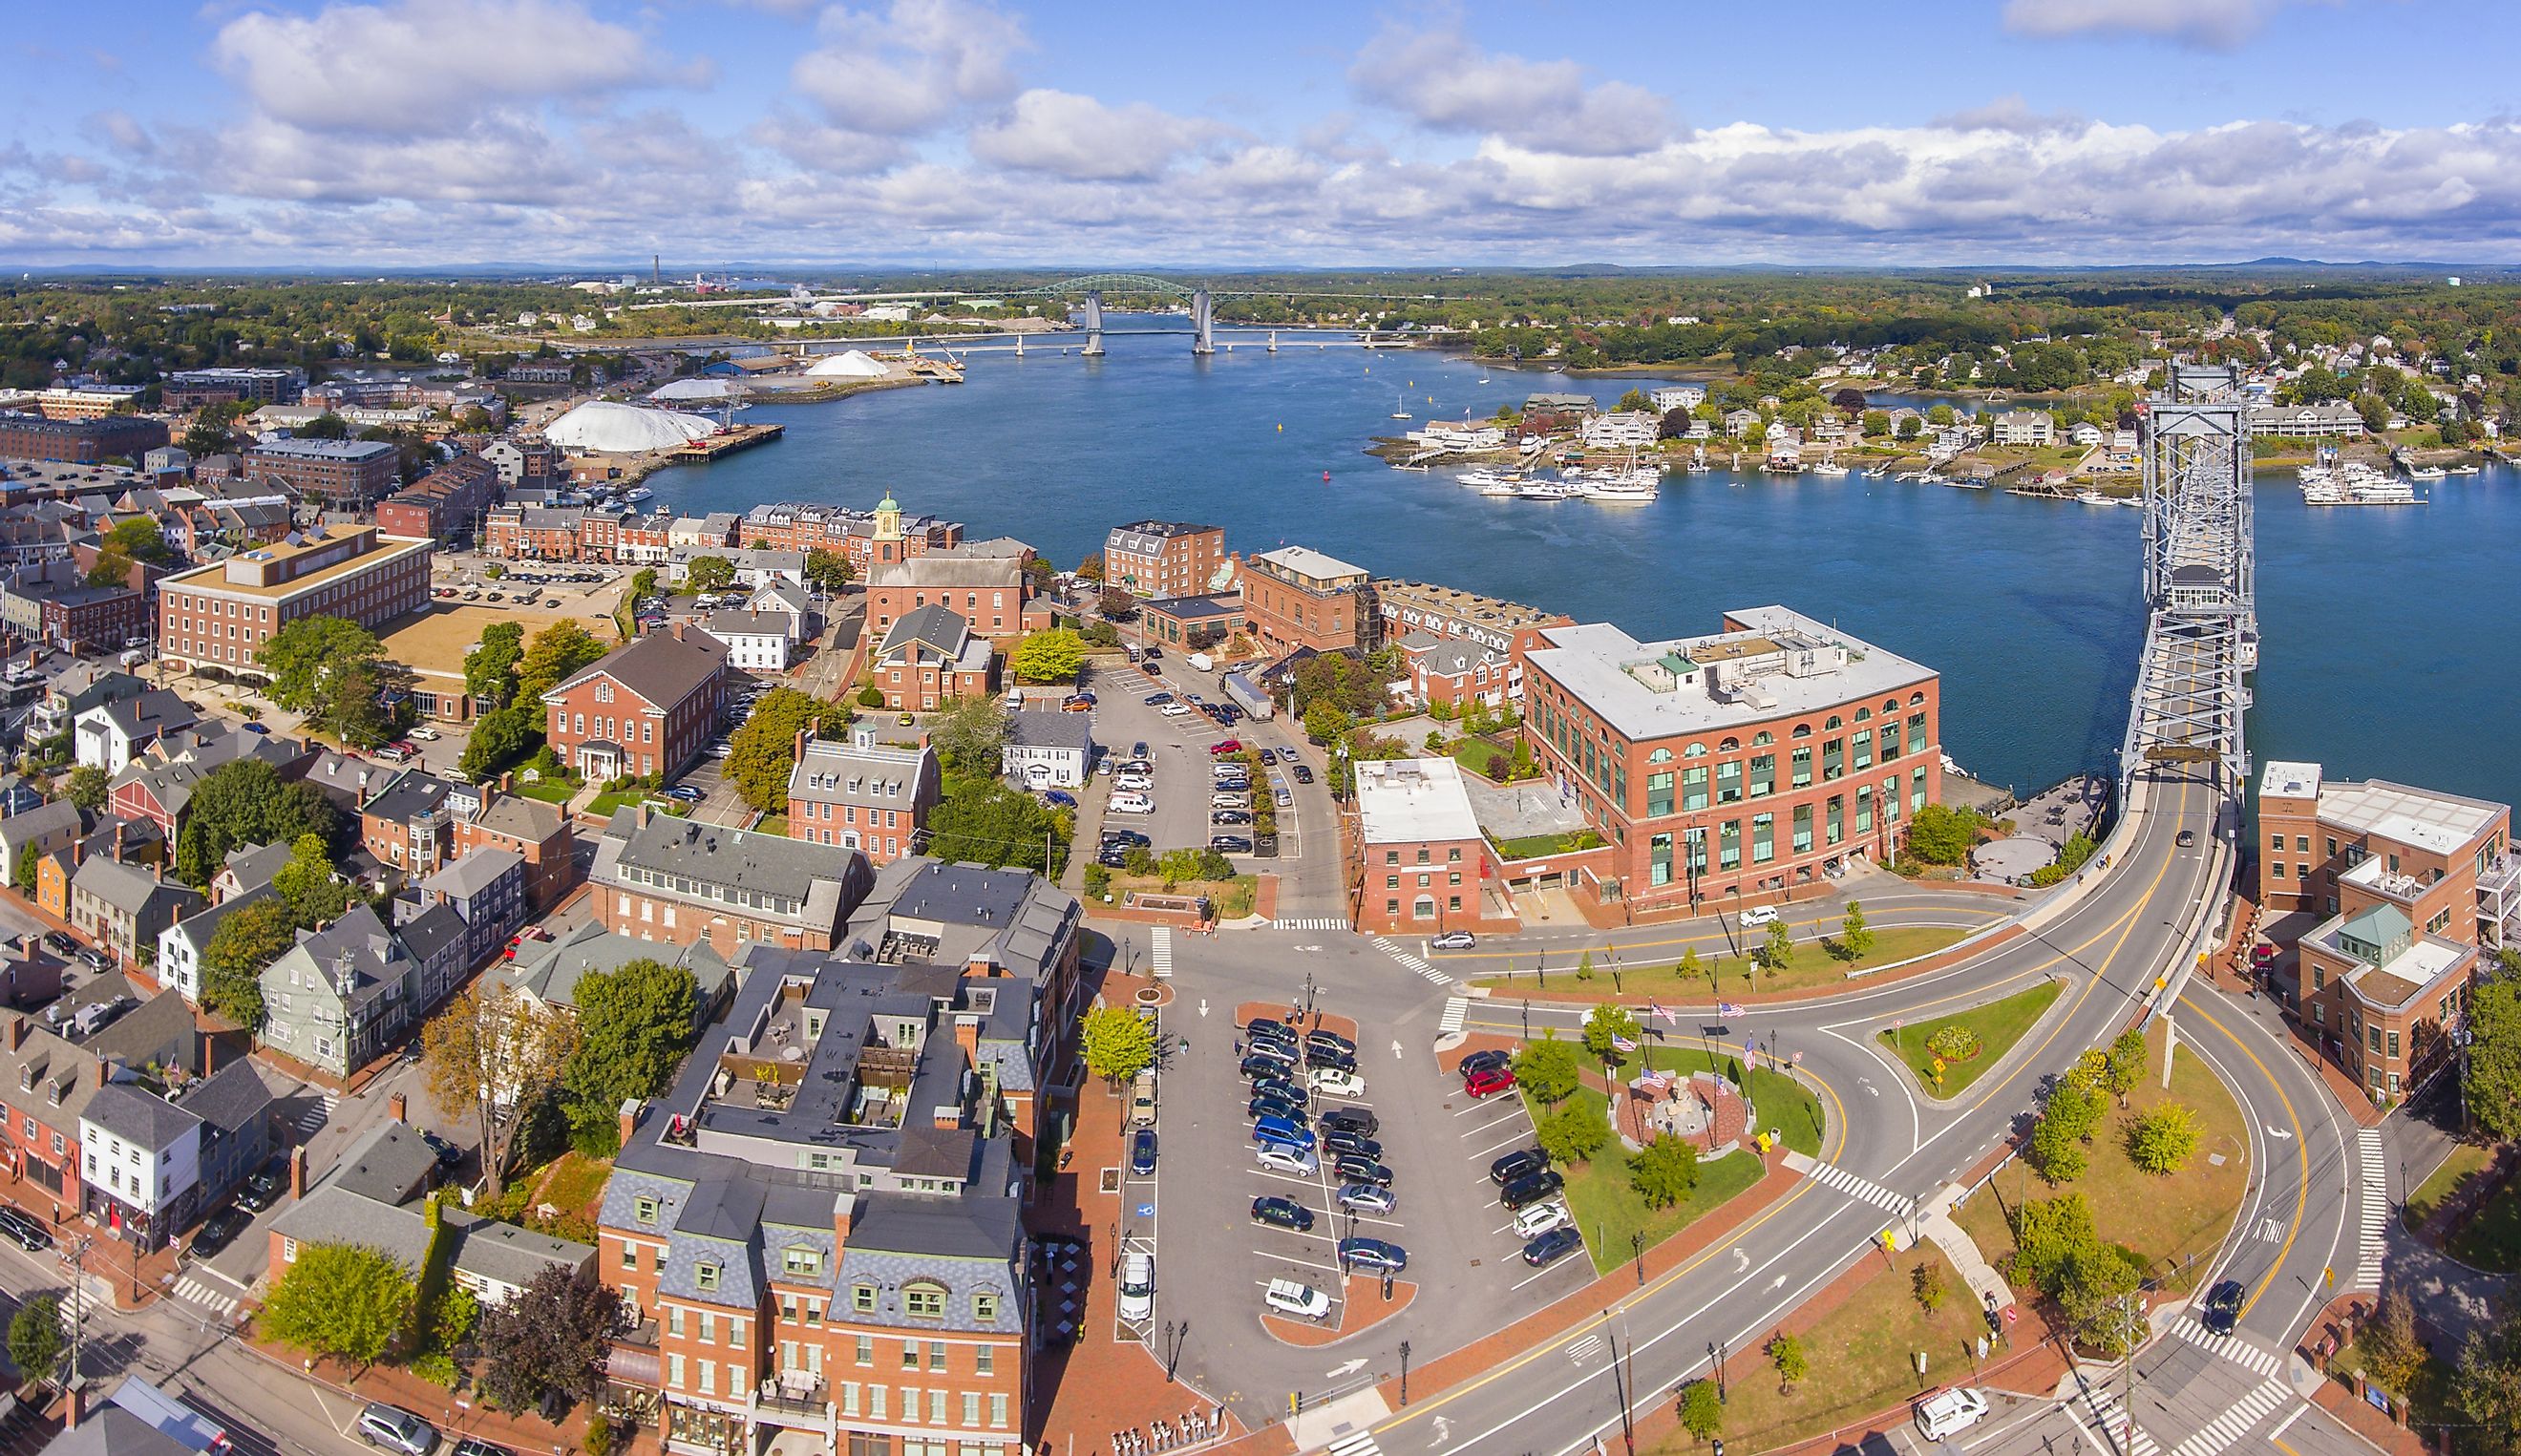 Portsmouth, New Hampshire's historic city center.